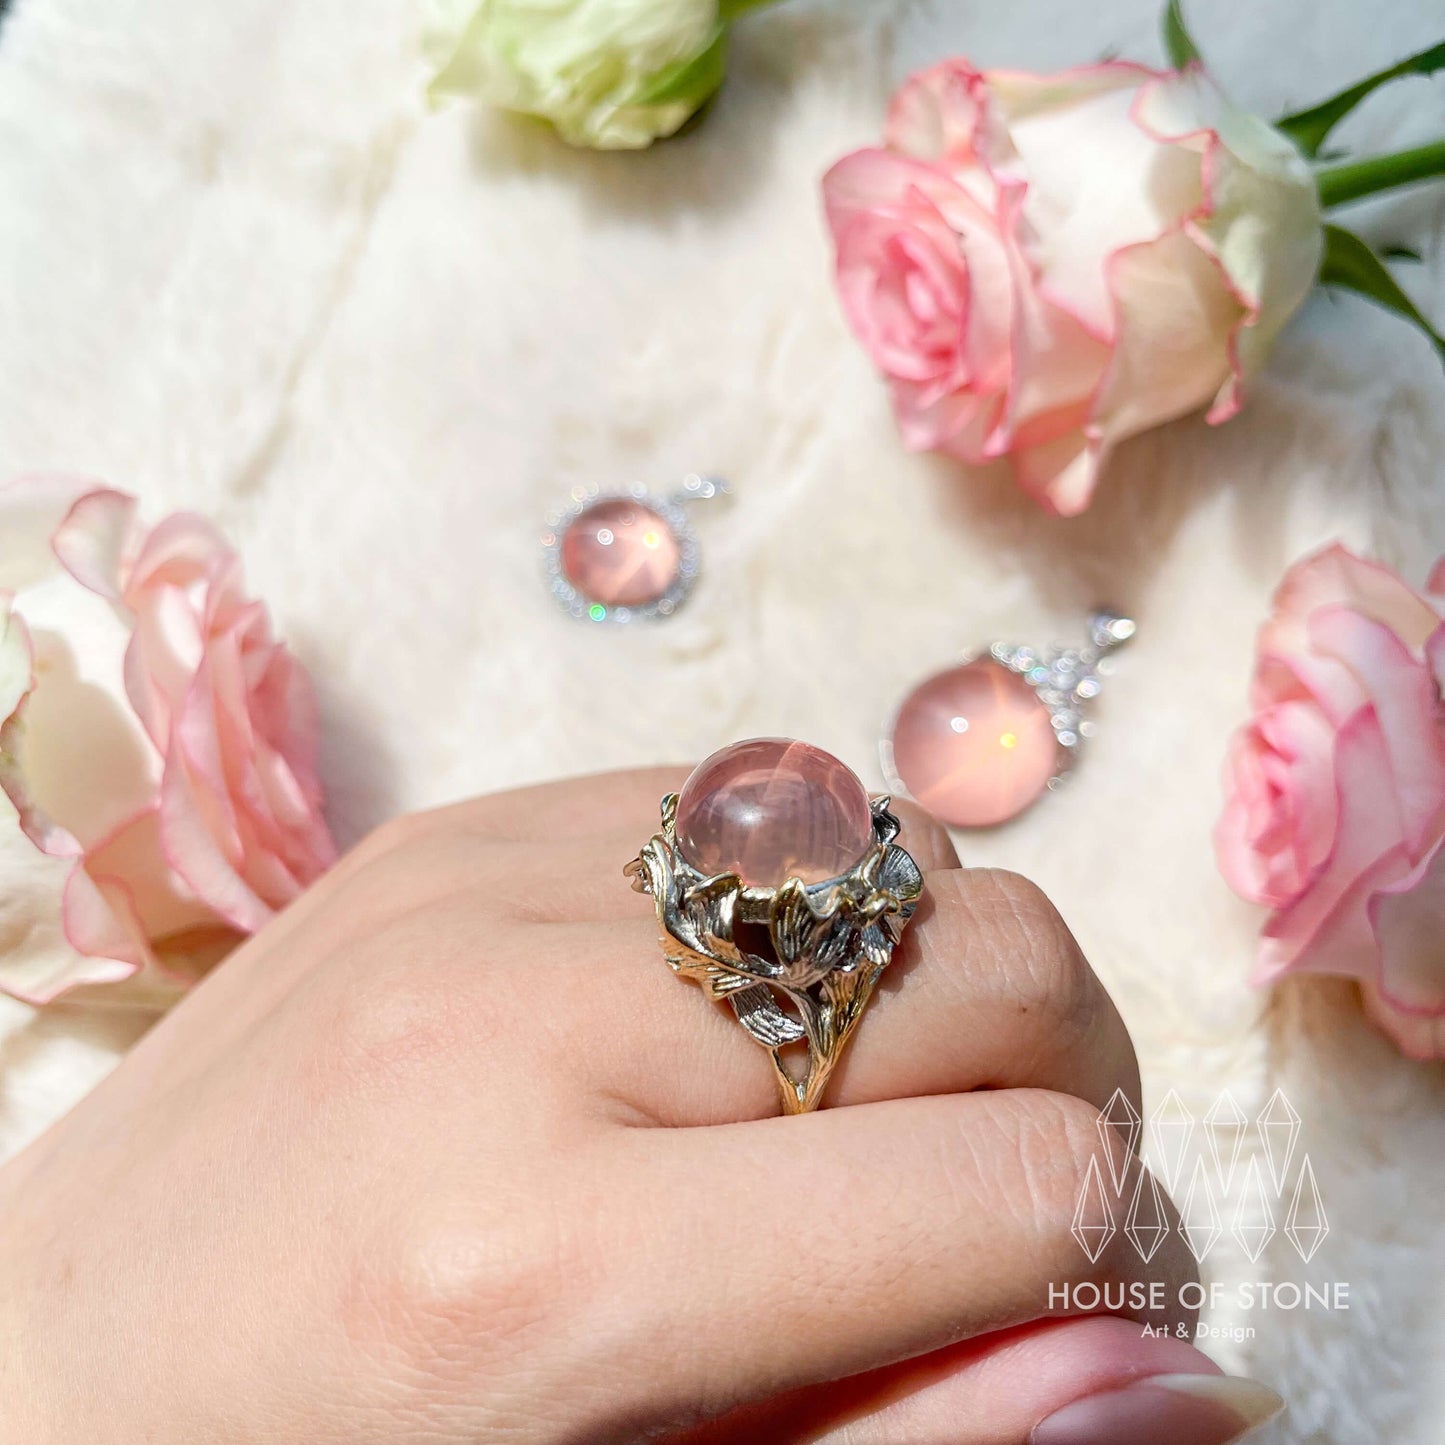 Star Rose Quartz Ring/High Quality Starlight Rose Quartz Ring/Starry Rose Quartz Jewelry